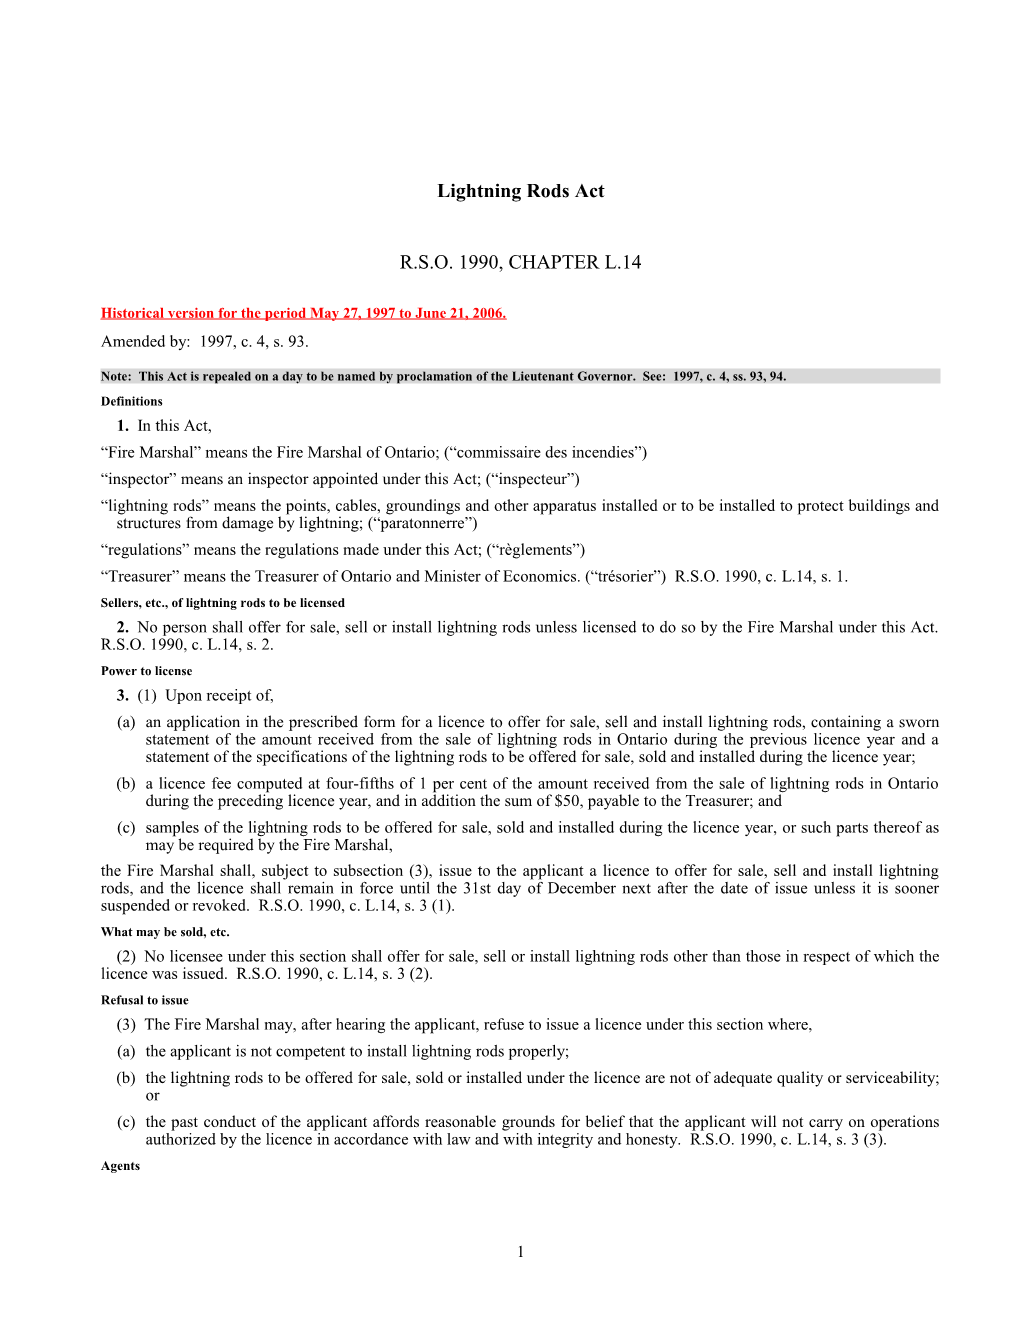 Lightning Rods Act, R.S.O. 1990, C. L.14